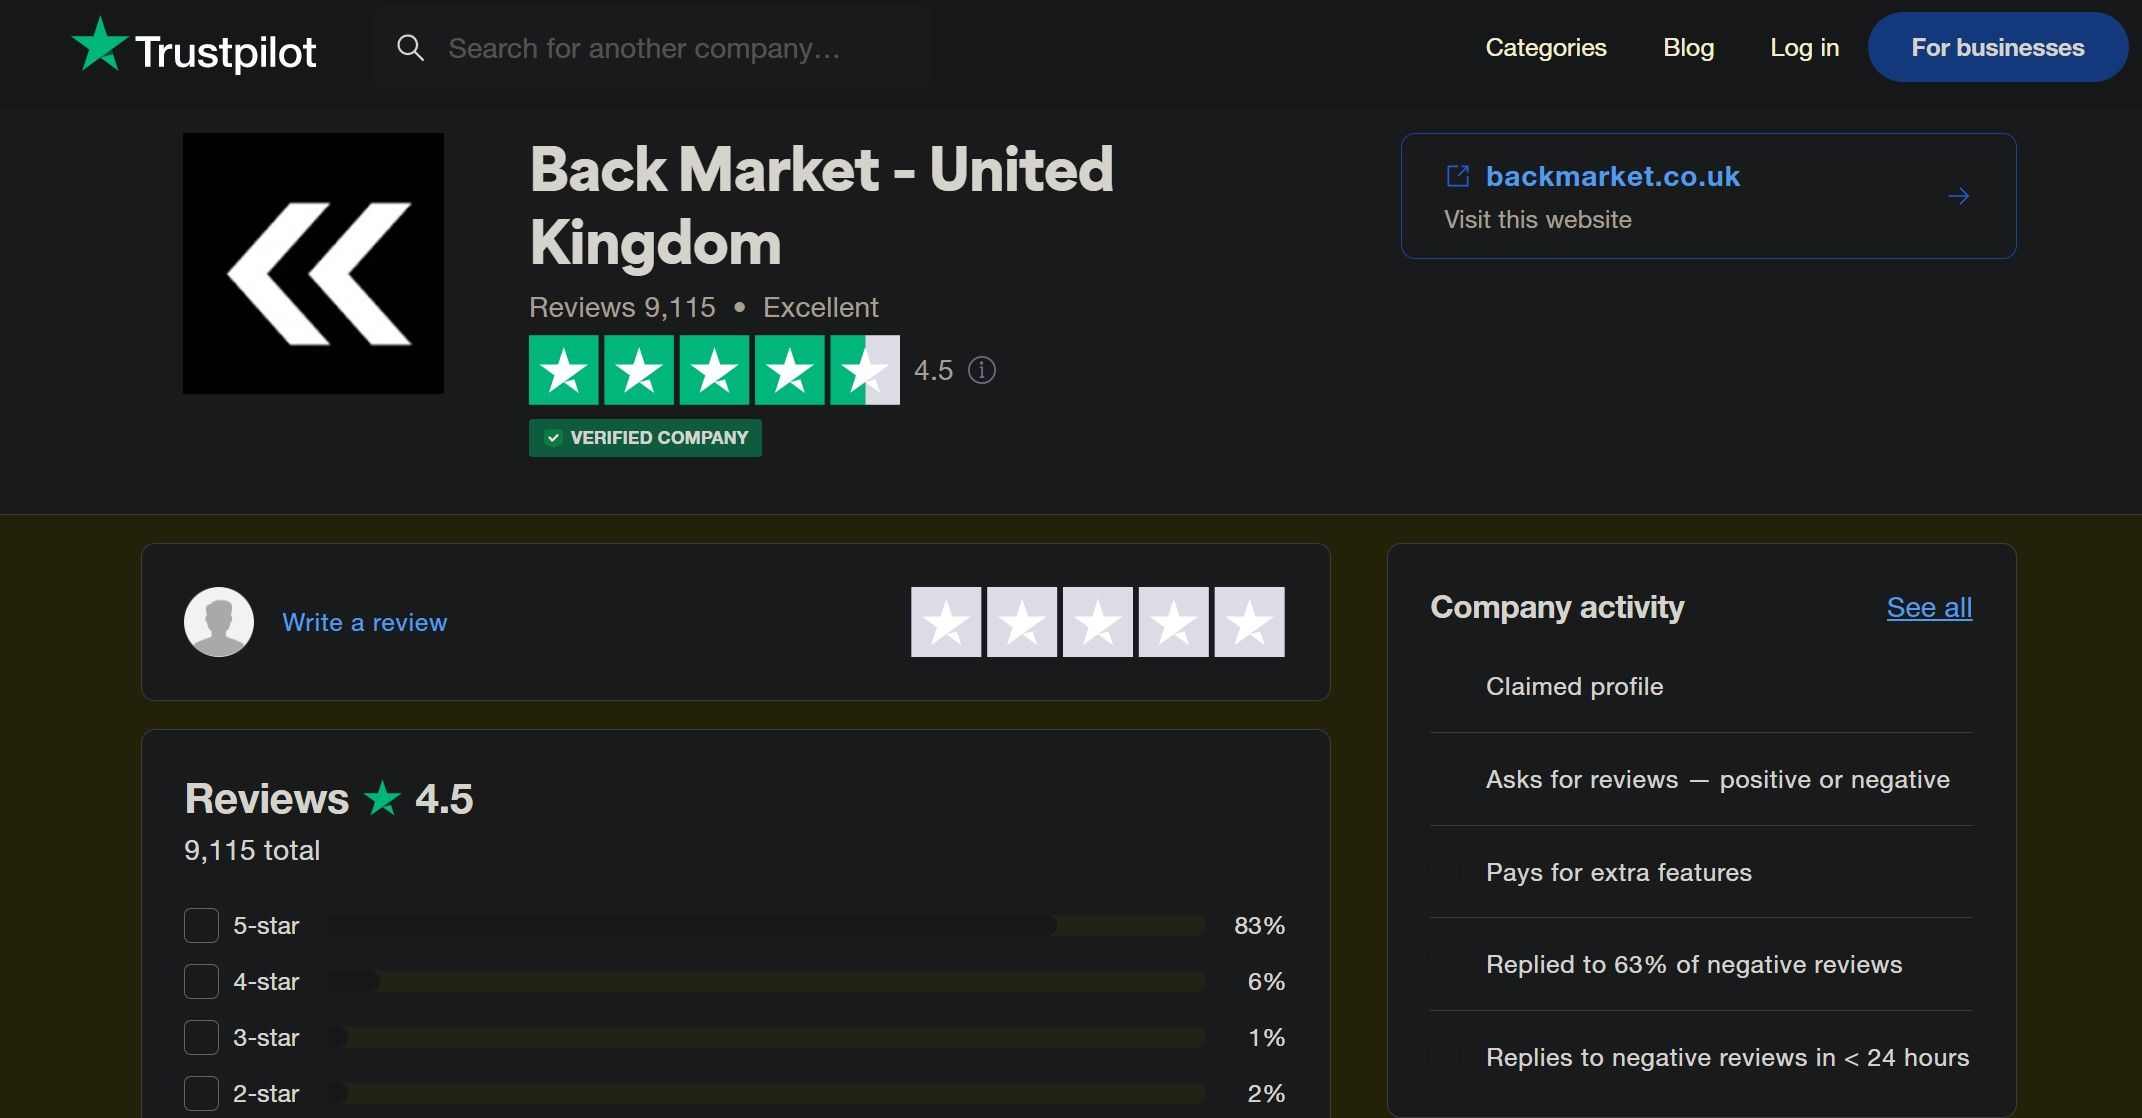 Back Market UK Ratings on Trustpilot